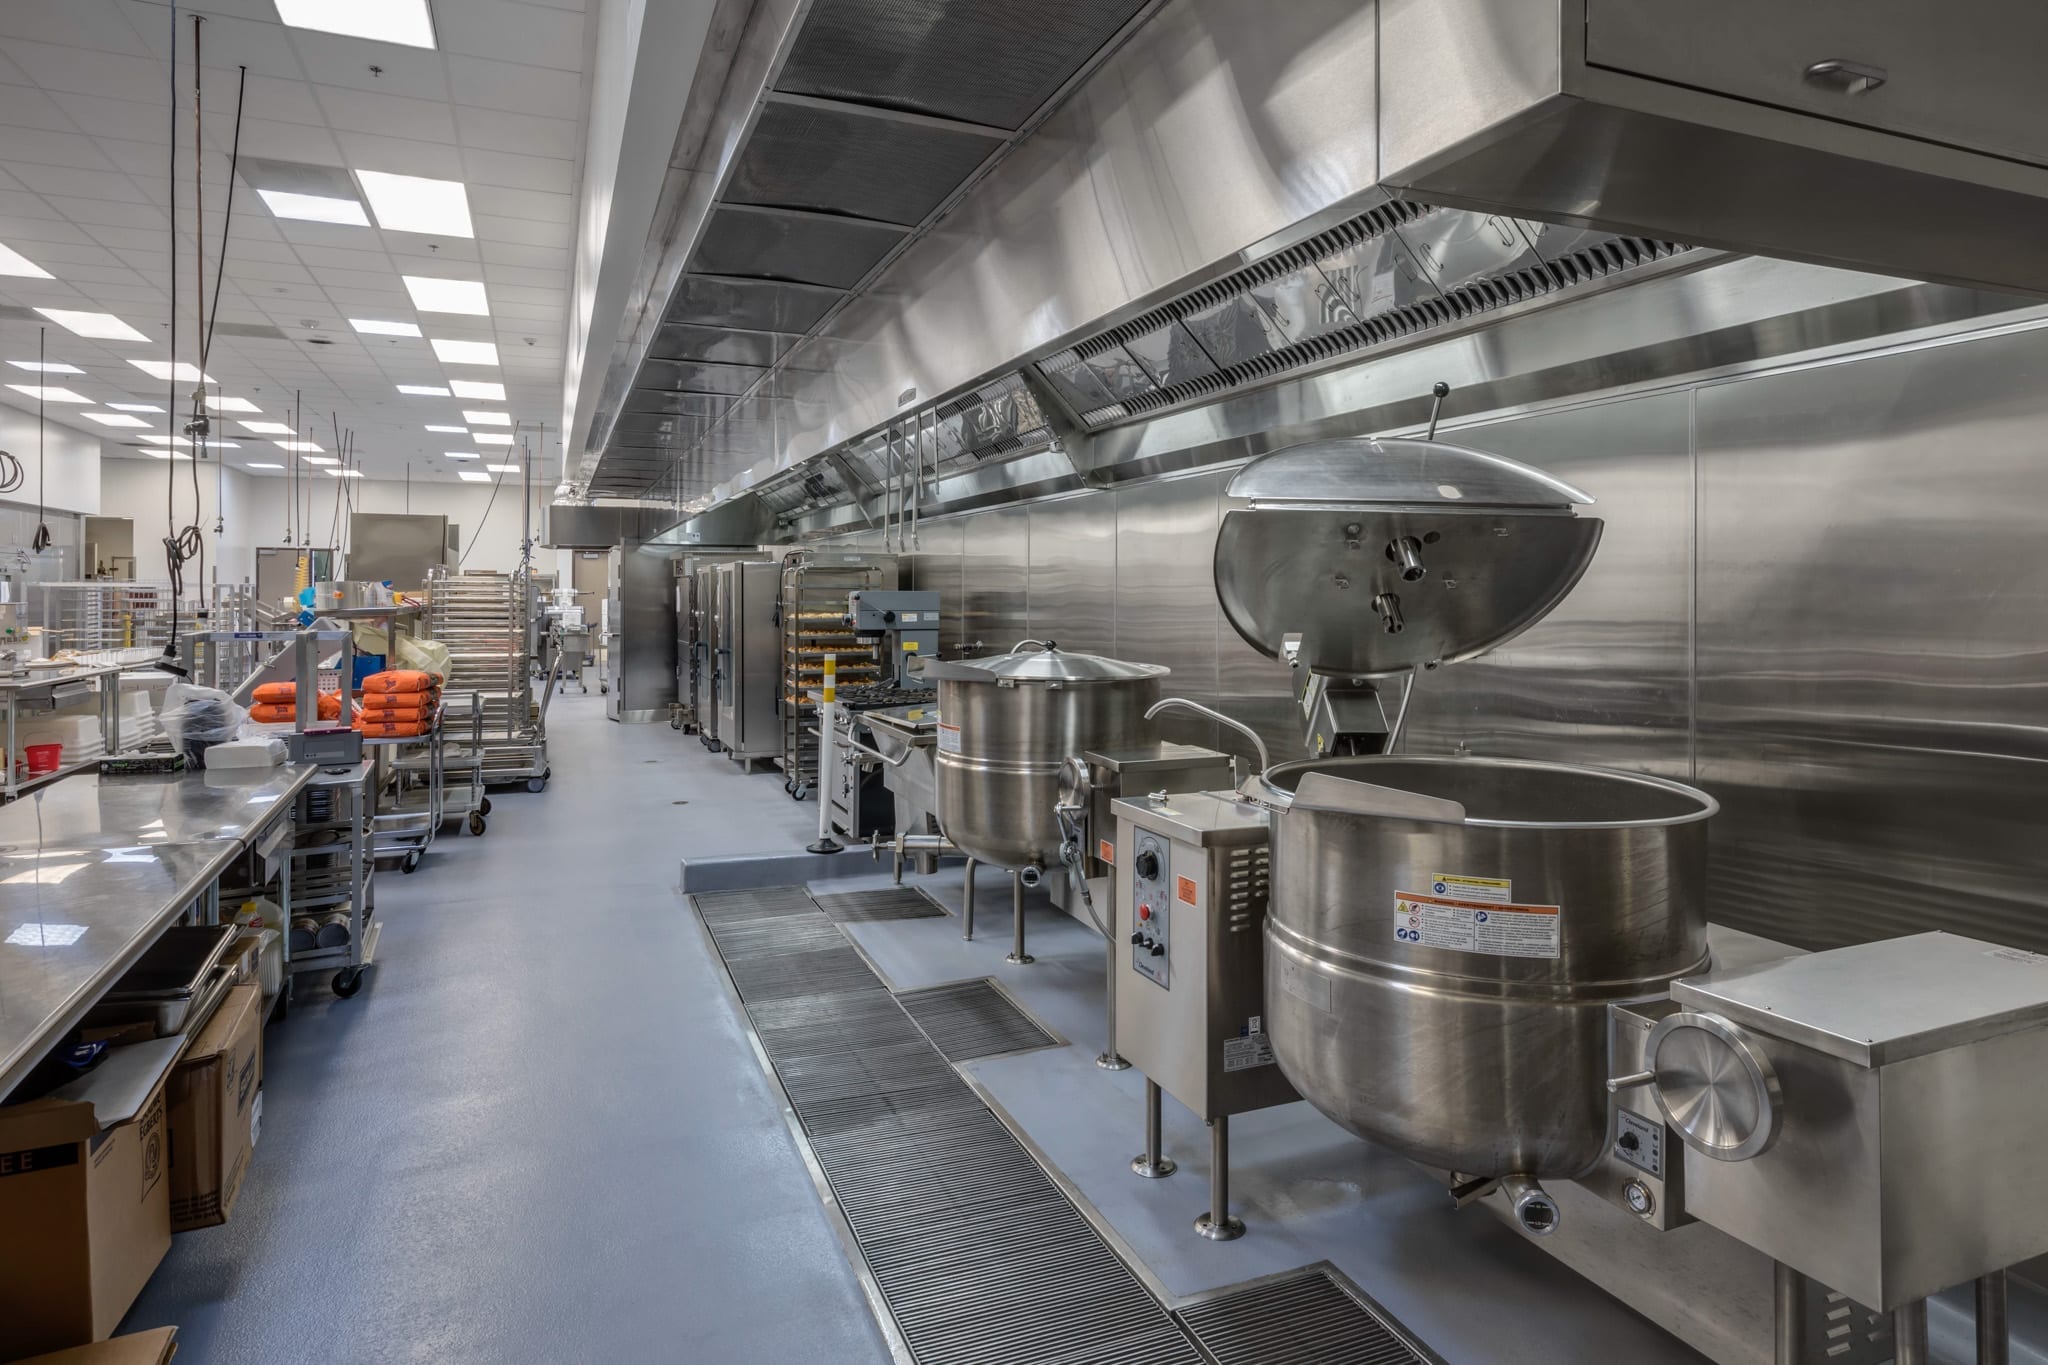 Irvine Unified School District kitchen machinery.